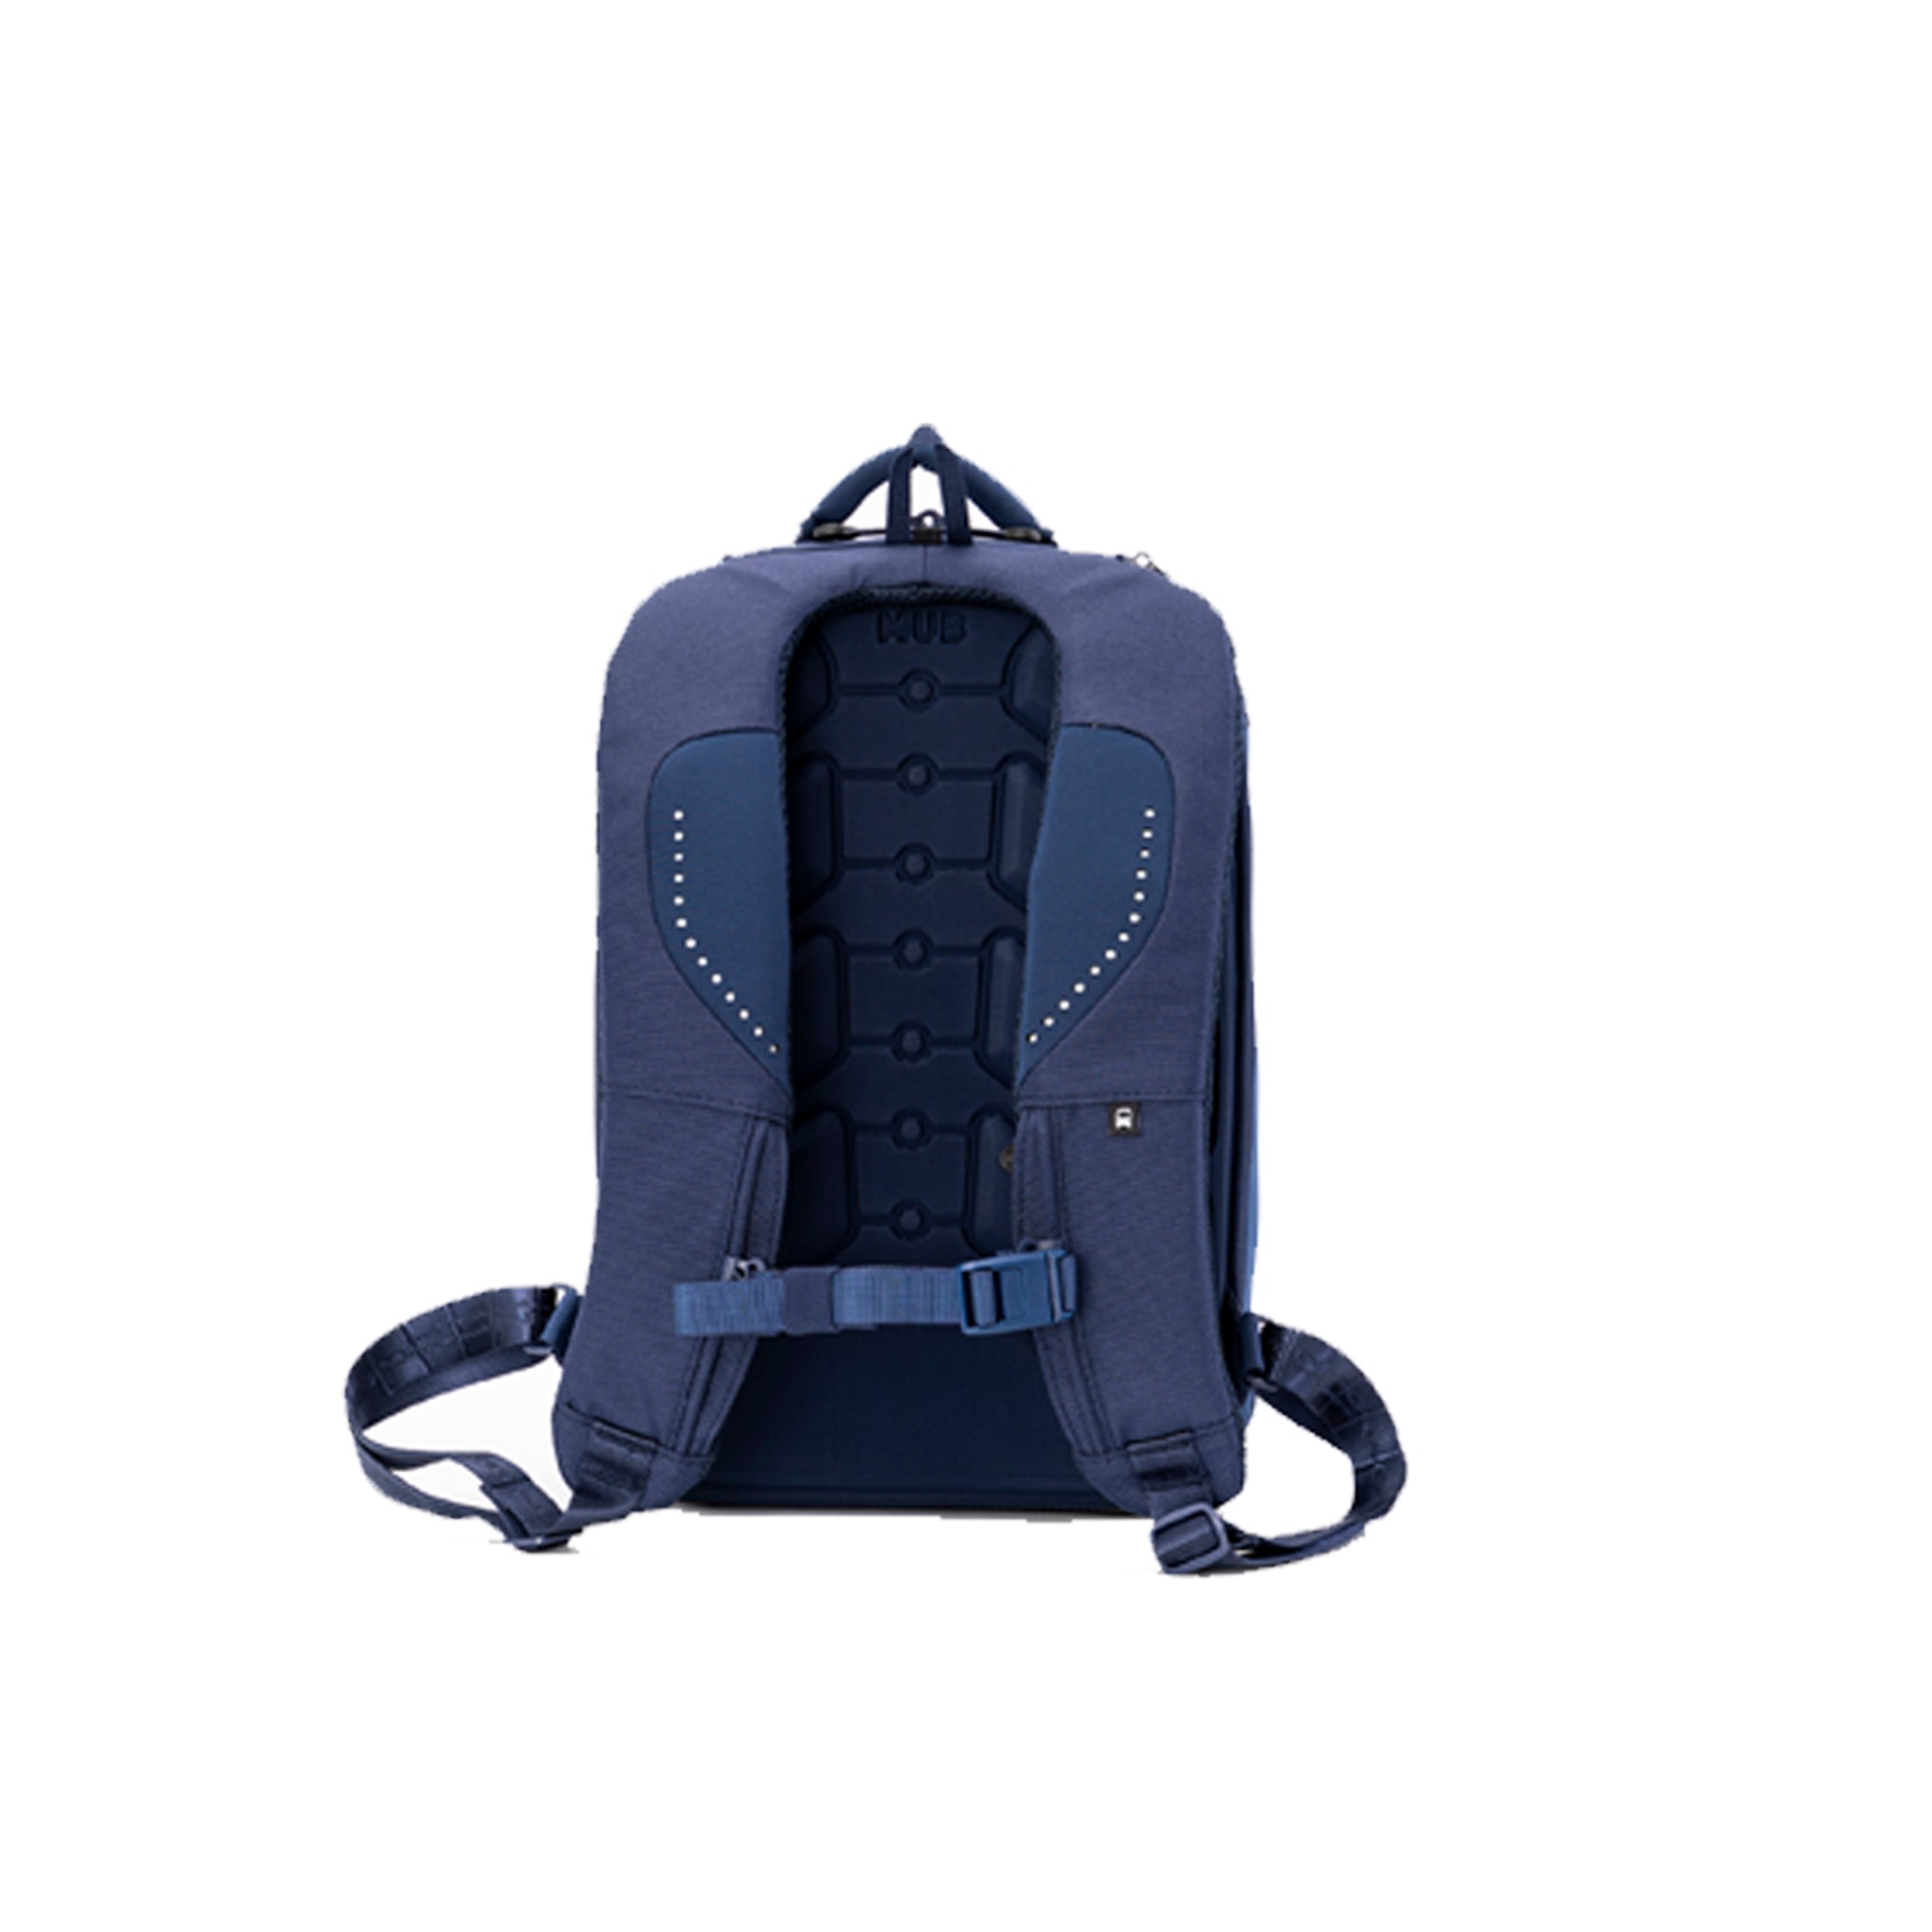 MUB TRAVELER MINI Classic Blue - The BiarritzI Deluxe Travel Backpack for Men